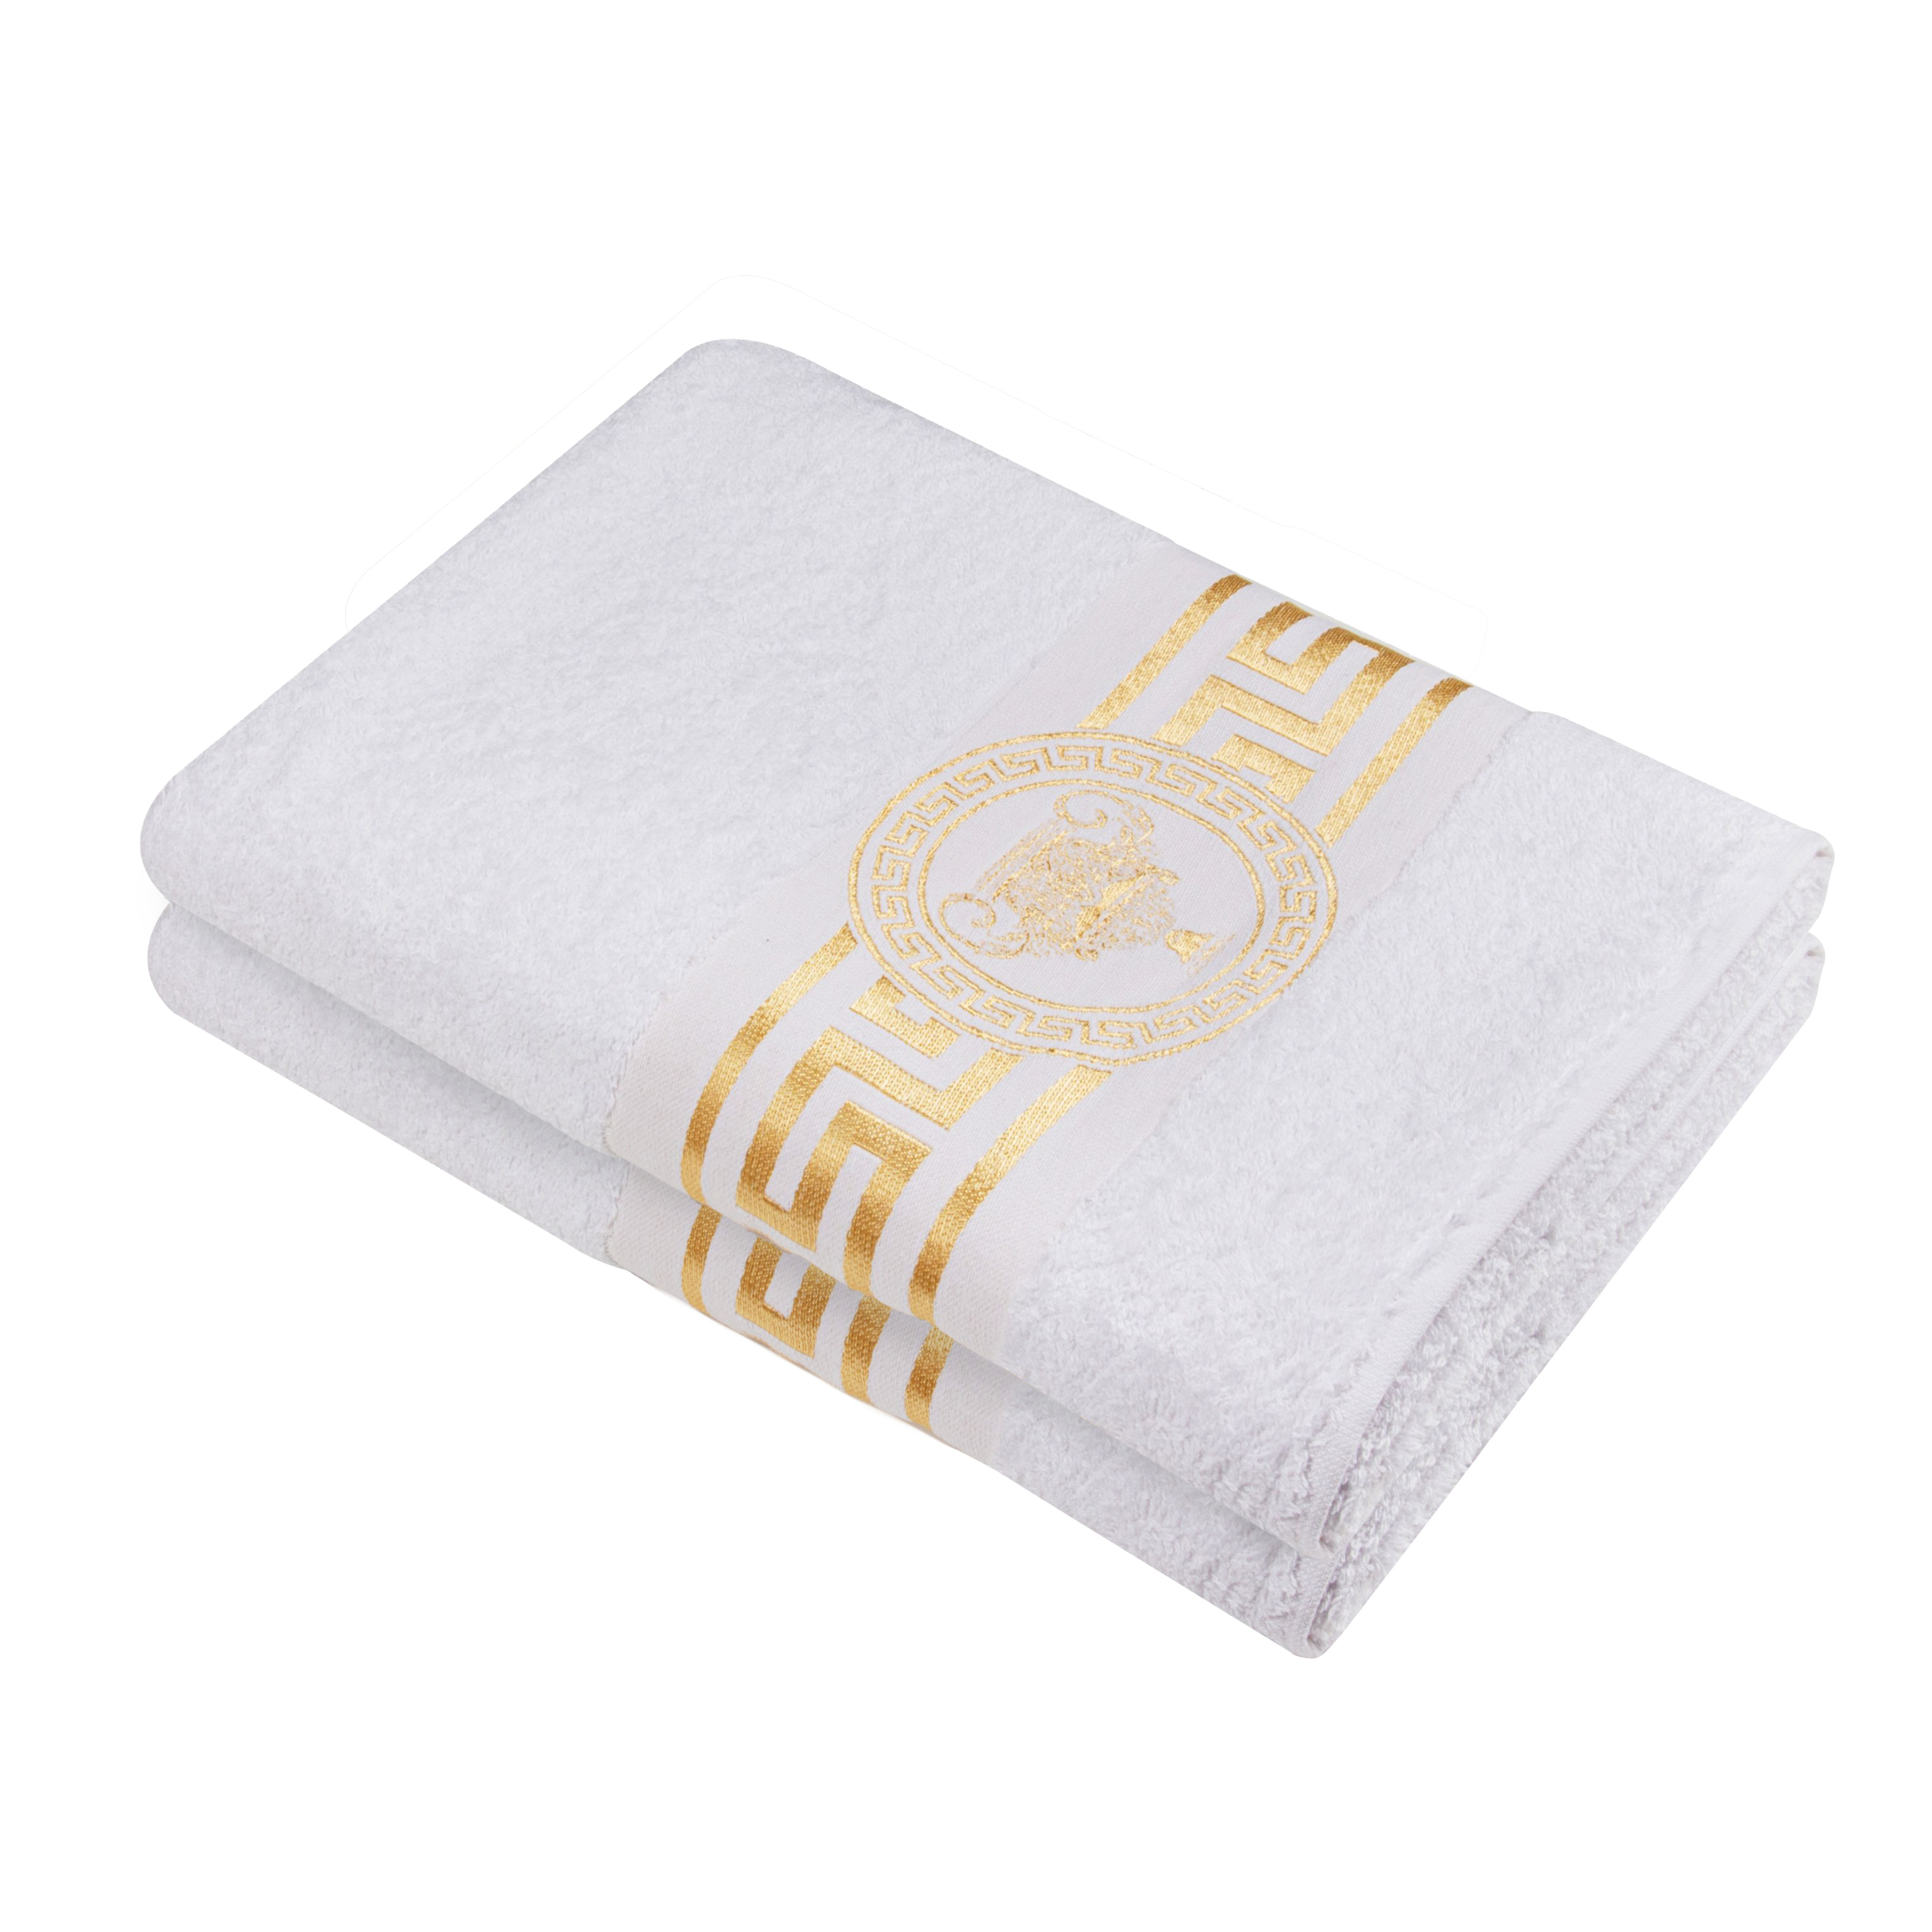 Meander Amphora Towels White Gold